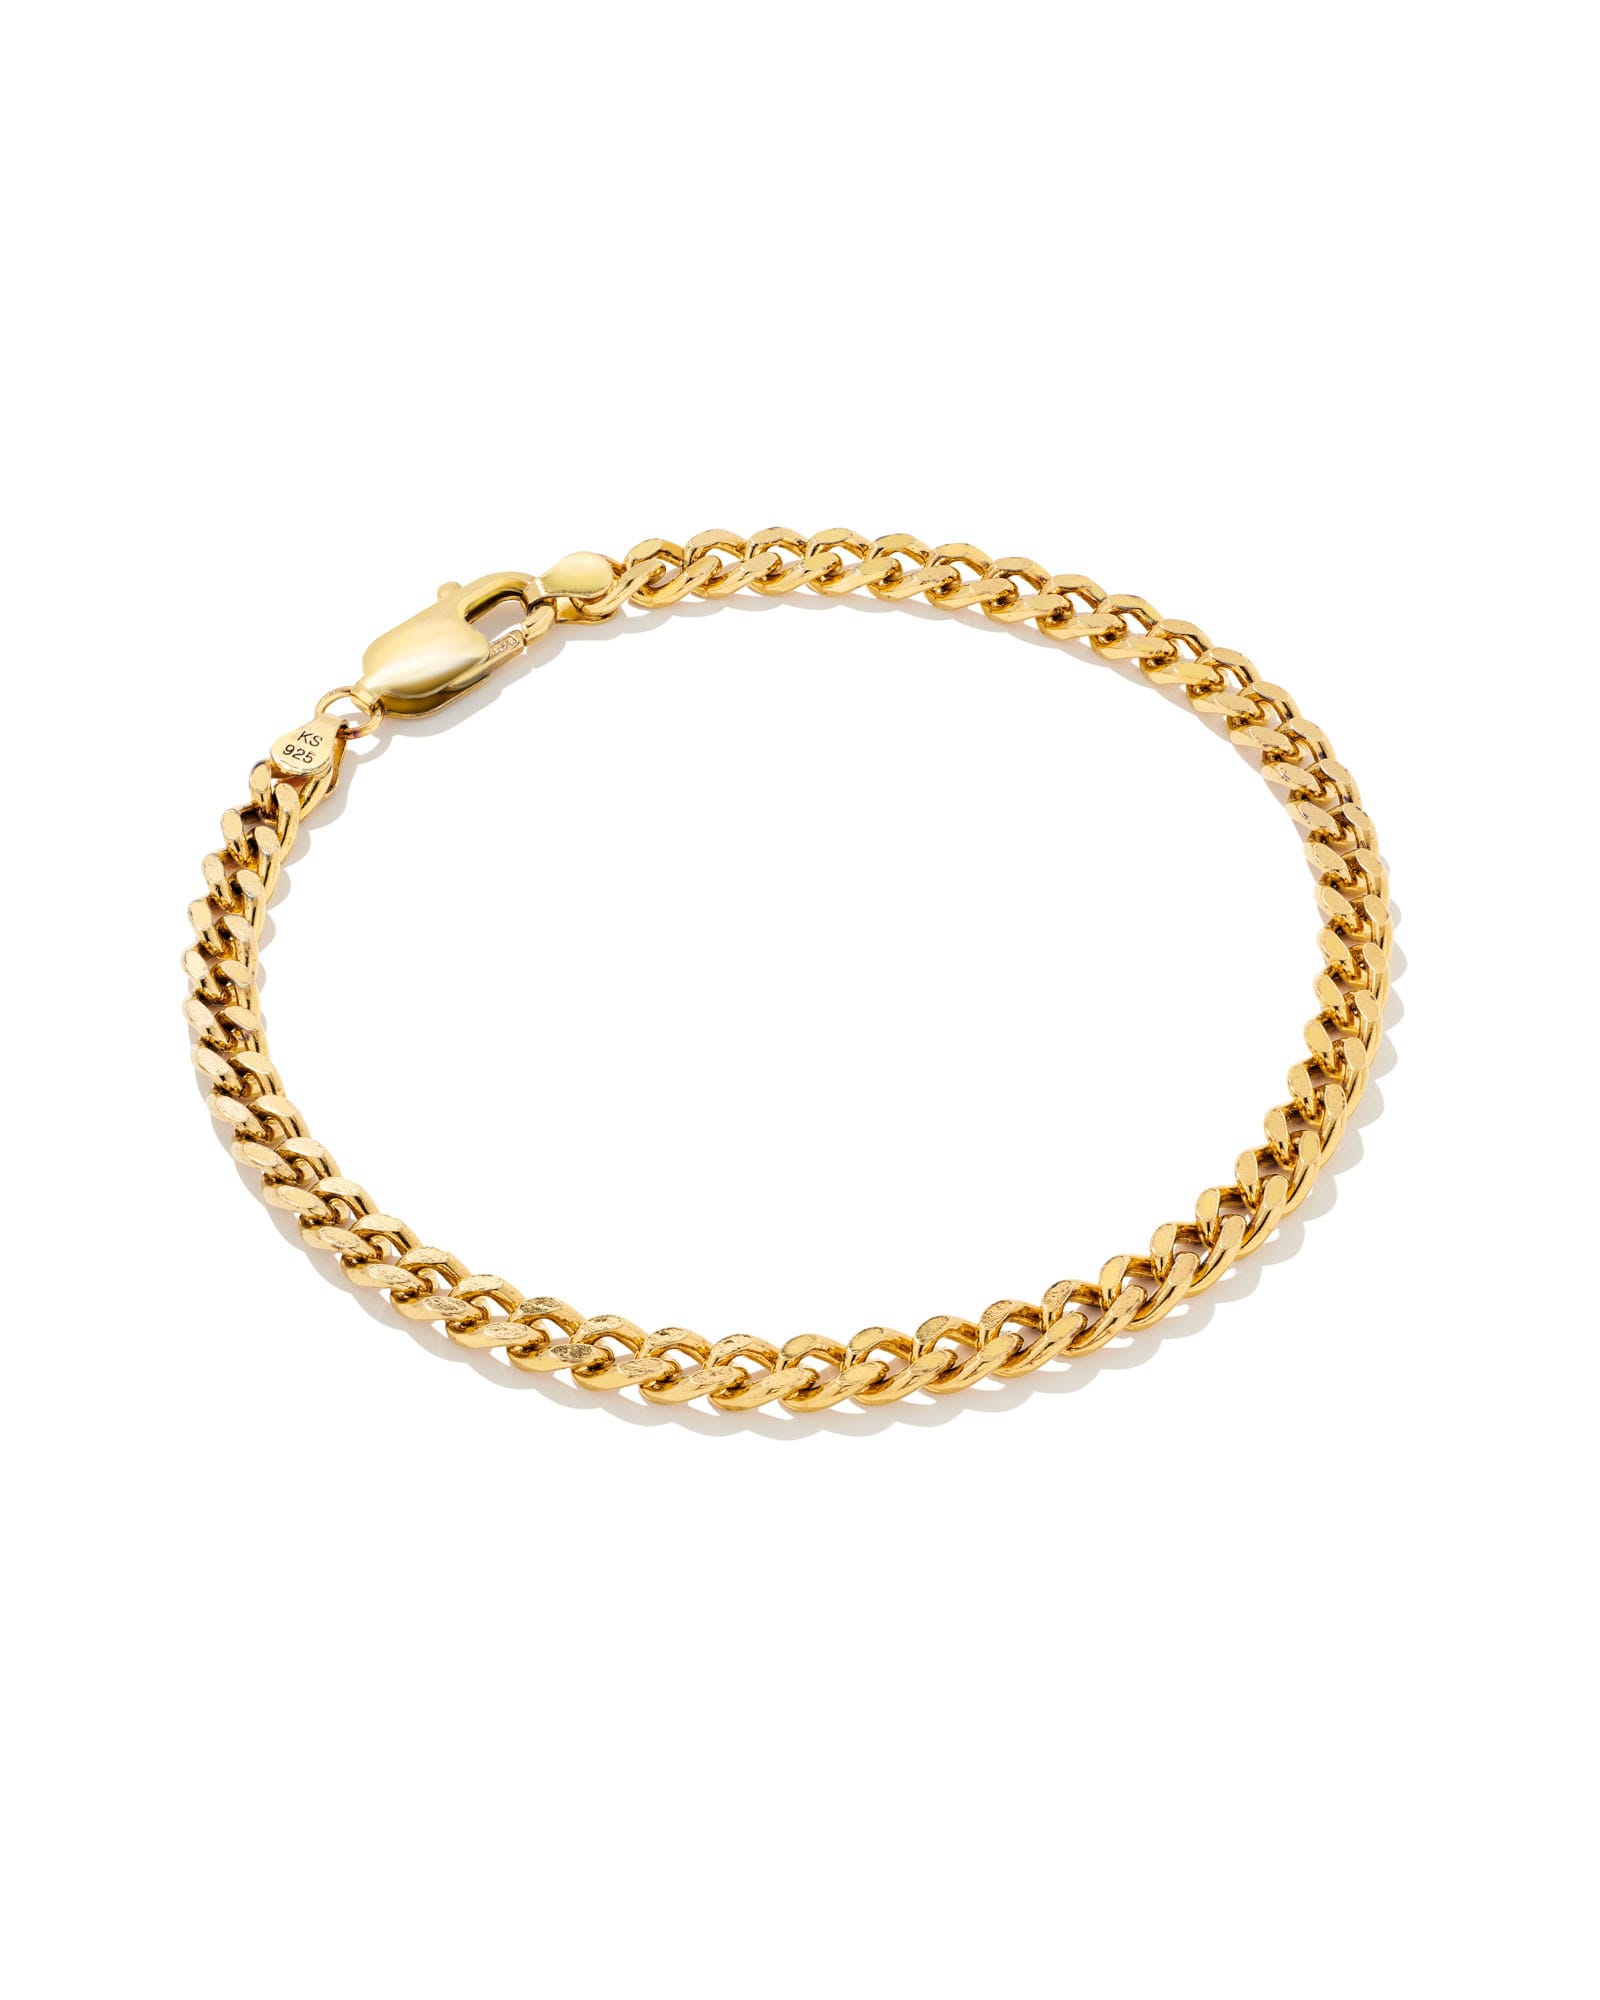 Kendra Scott Men's Beck Round Box Chain Bracelet in 18K Gold Vermeil